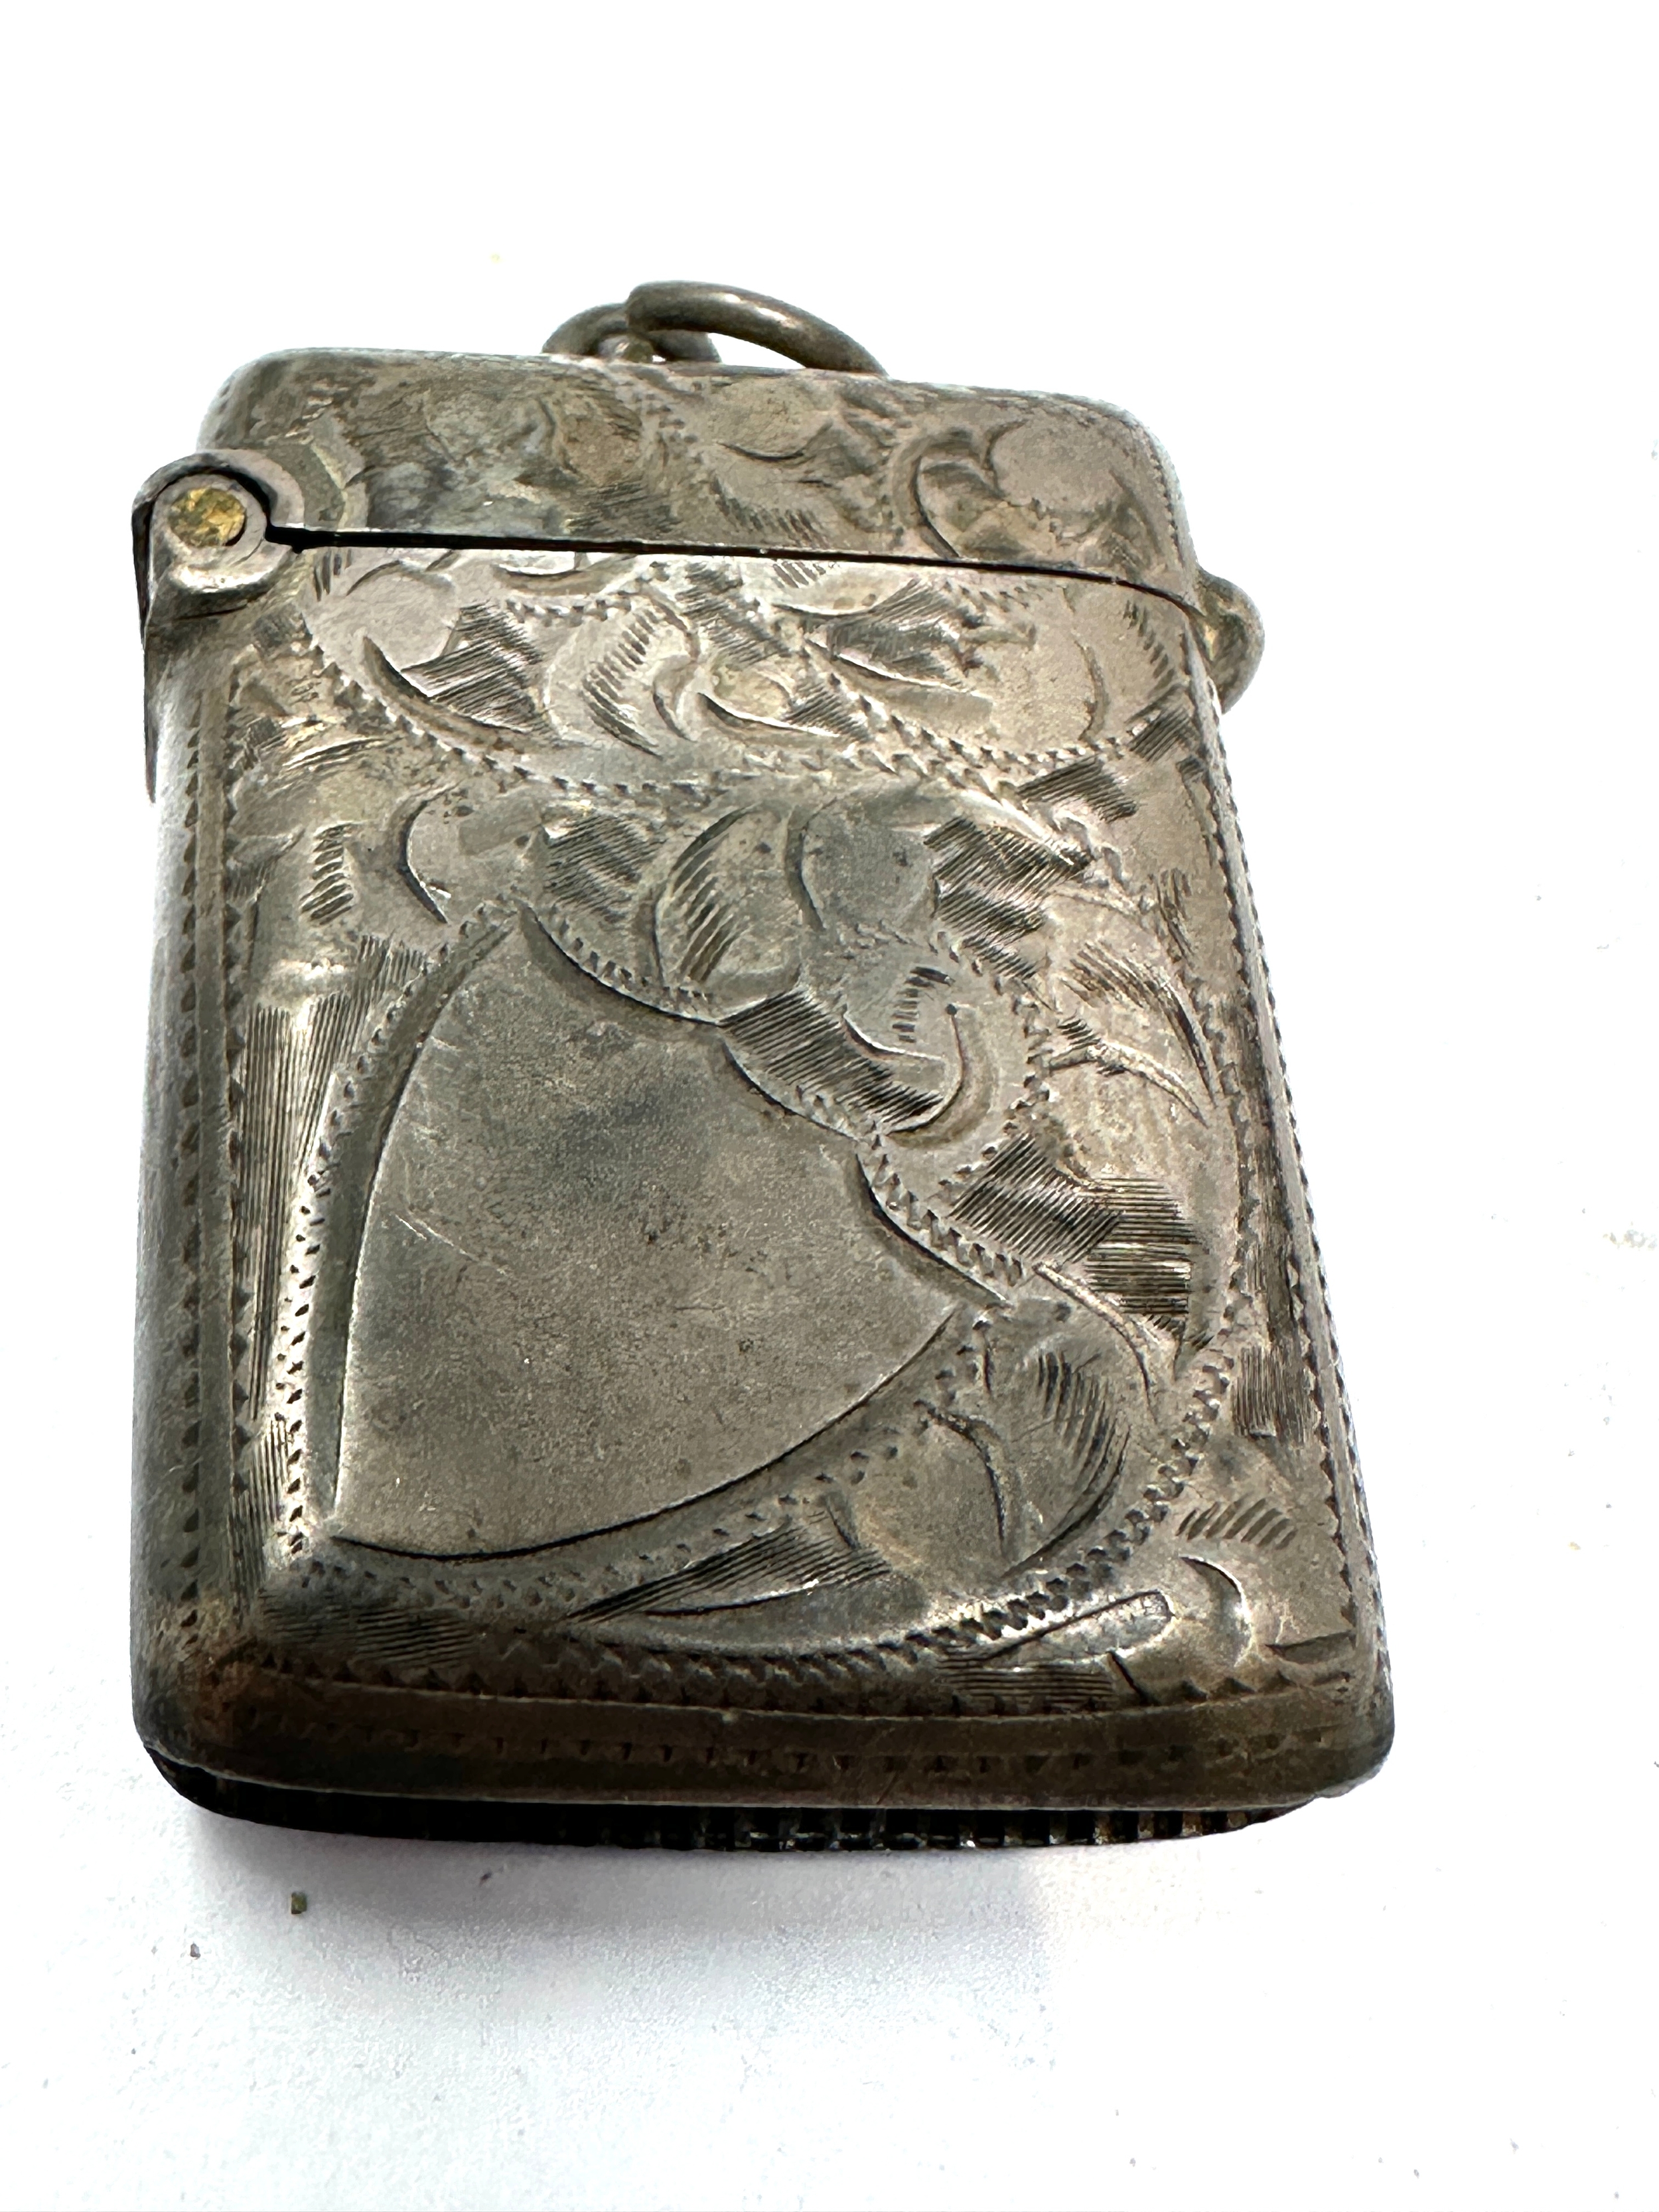 Antique silver vesta case - Image 4 of 4